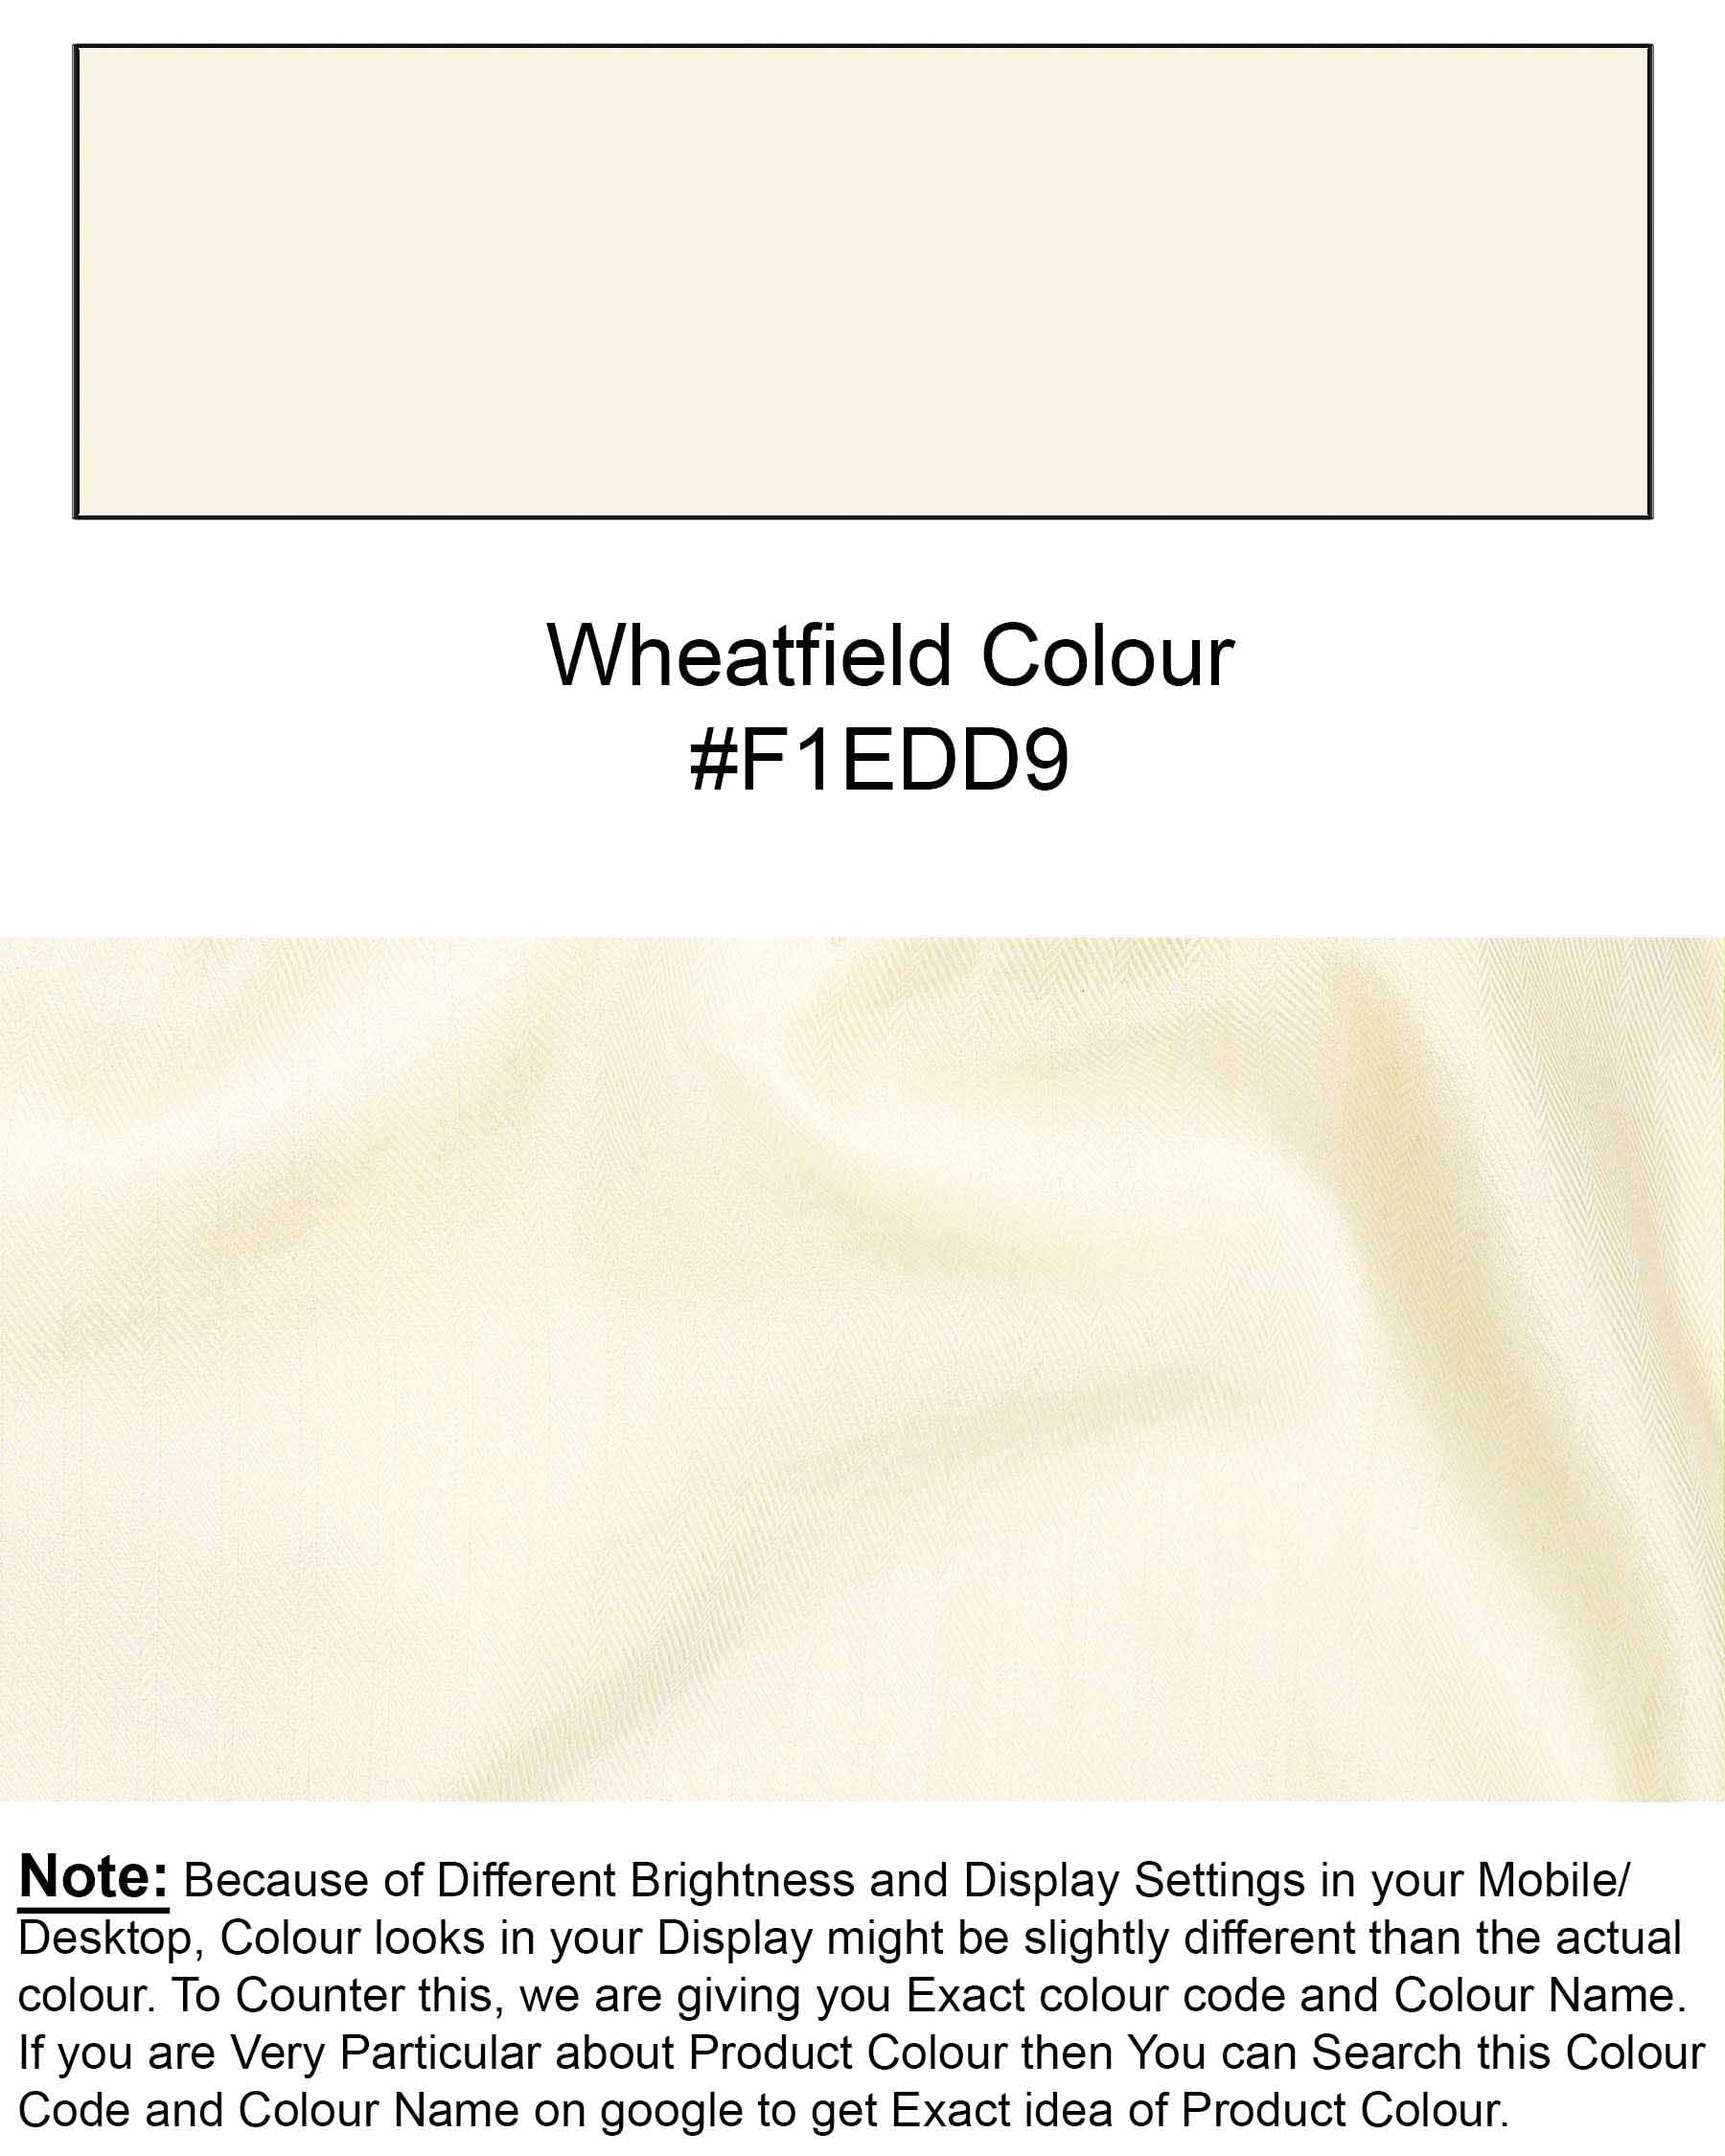 Wheatfield Yellow Twill Textured Premium Cotton Shirt 6463-BD-38, 6463-BD-H-38, 6463-BD-39, 6463-BD-H-39, 6463-BD-40, 6463-BD-H-40, 6463-BD-42, 6463-BD-H-42, 6463-BD-44, 6463-BD-H-44, 6463-BD-46, 6463-BD-H-46, 6463-BD-48, 6463-BD-H-48, 6463-BD-50, 6463-BD-H-50, 6463-BD-52, 6463-BD-H-52